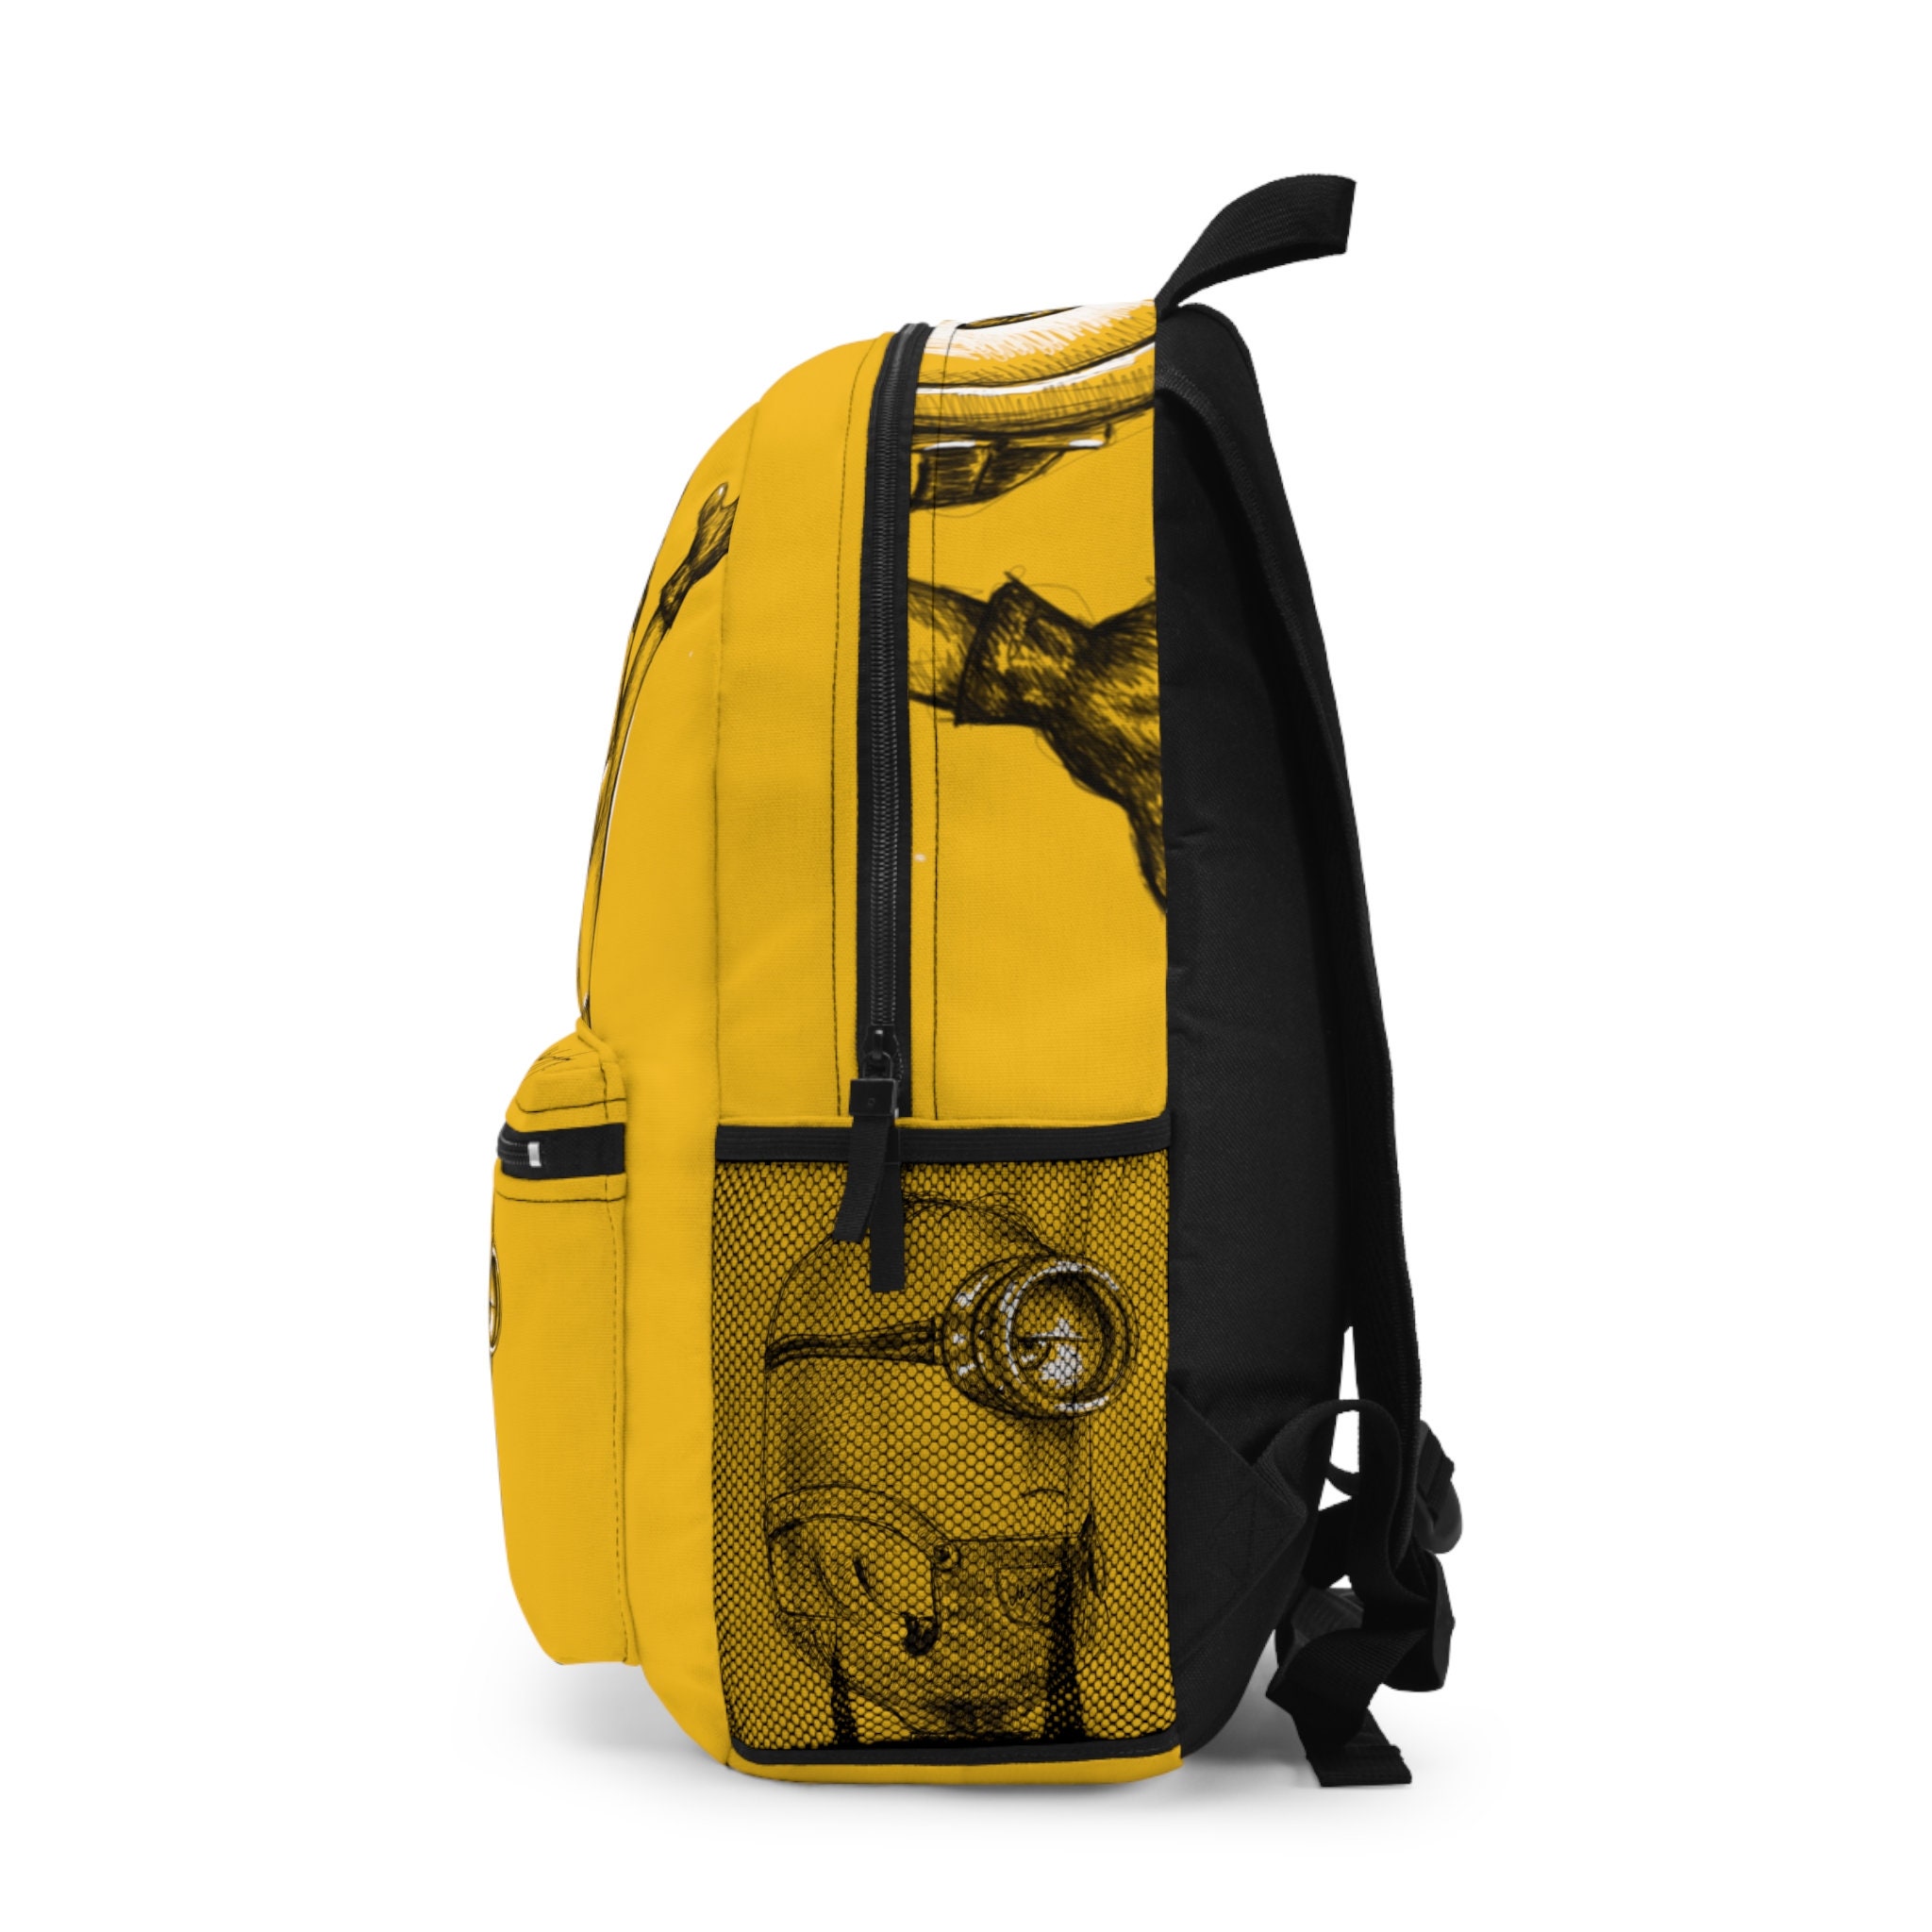 Yellow Kids School Backpack, Minion Design on Unisex Bag